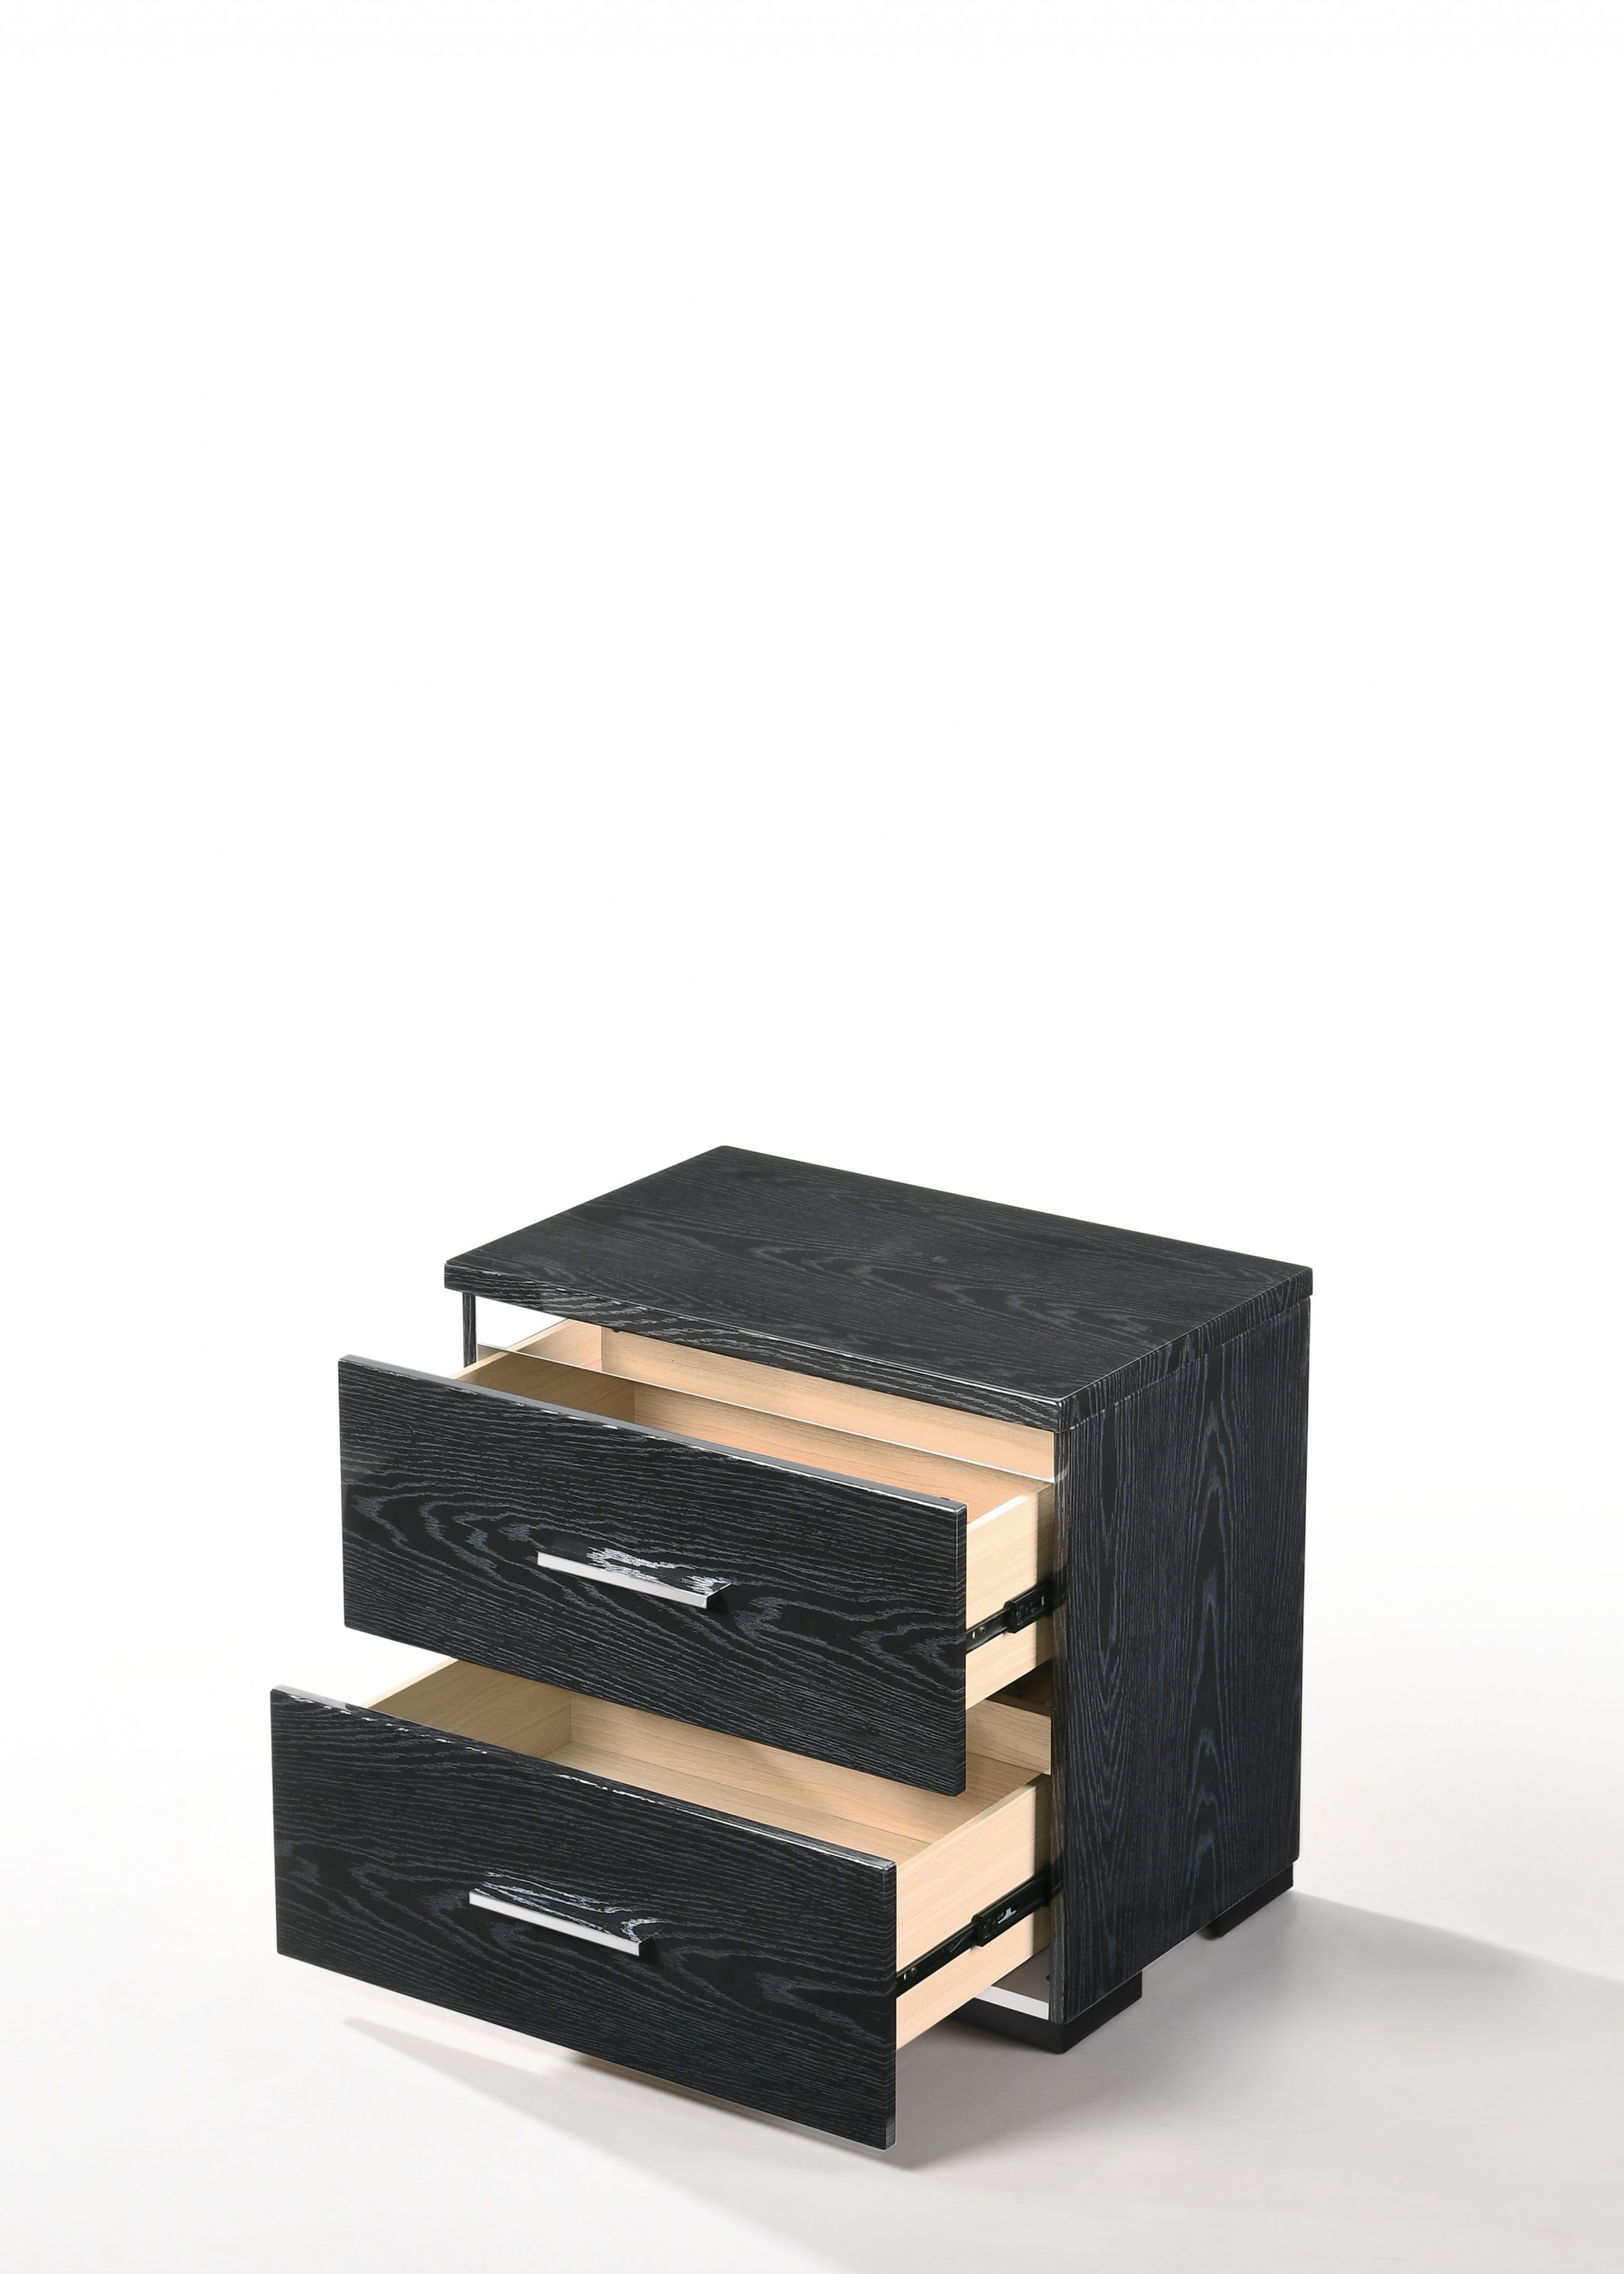 15" X 22" X 23" Black (High Gloss) Wood Veneer (Paper) Nightstand